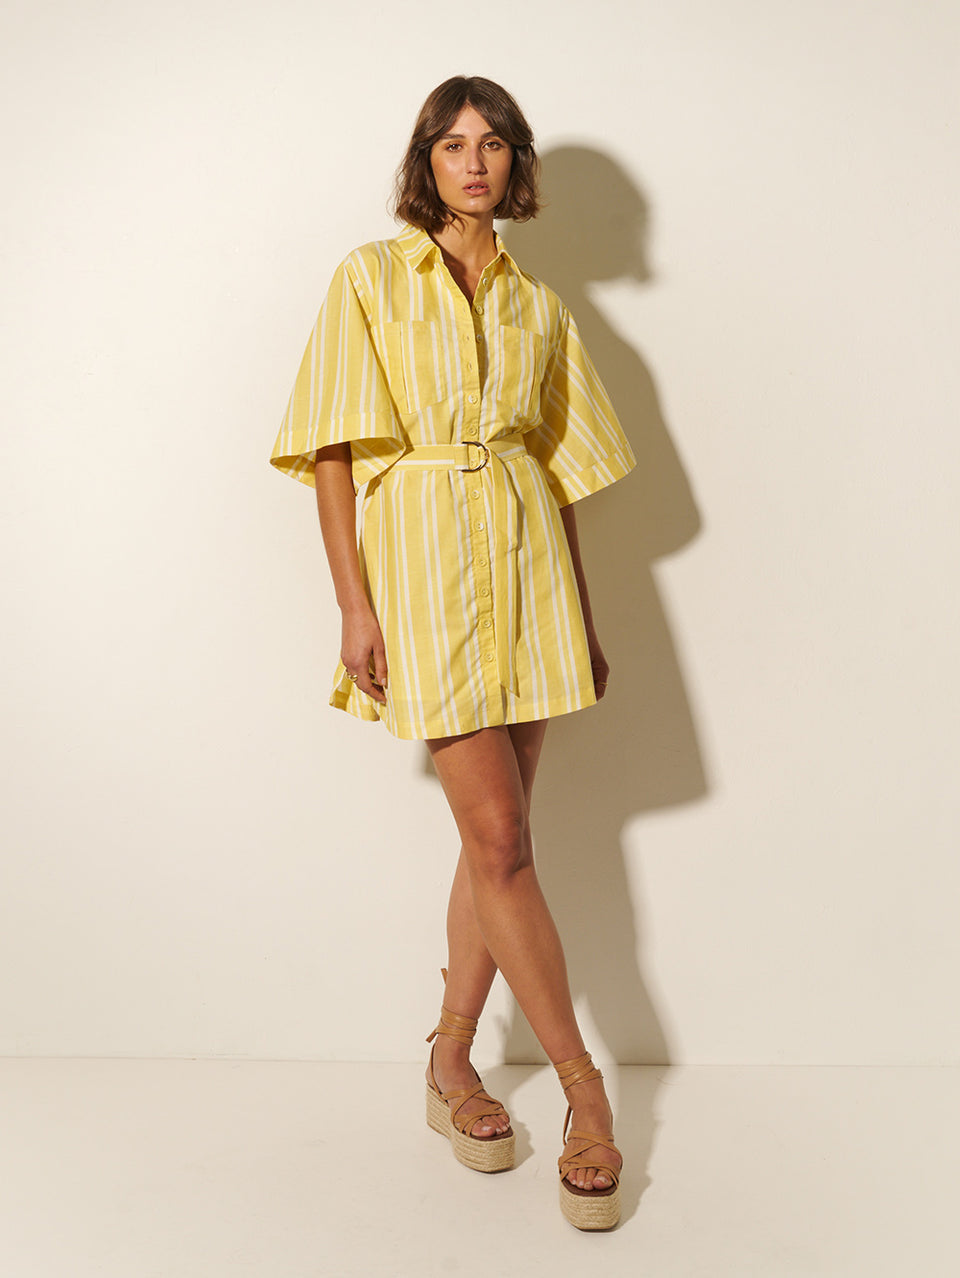 Lola Shirt Dress KIVARI | Model wears yellow and white striped shirt dress